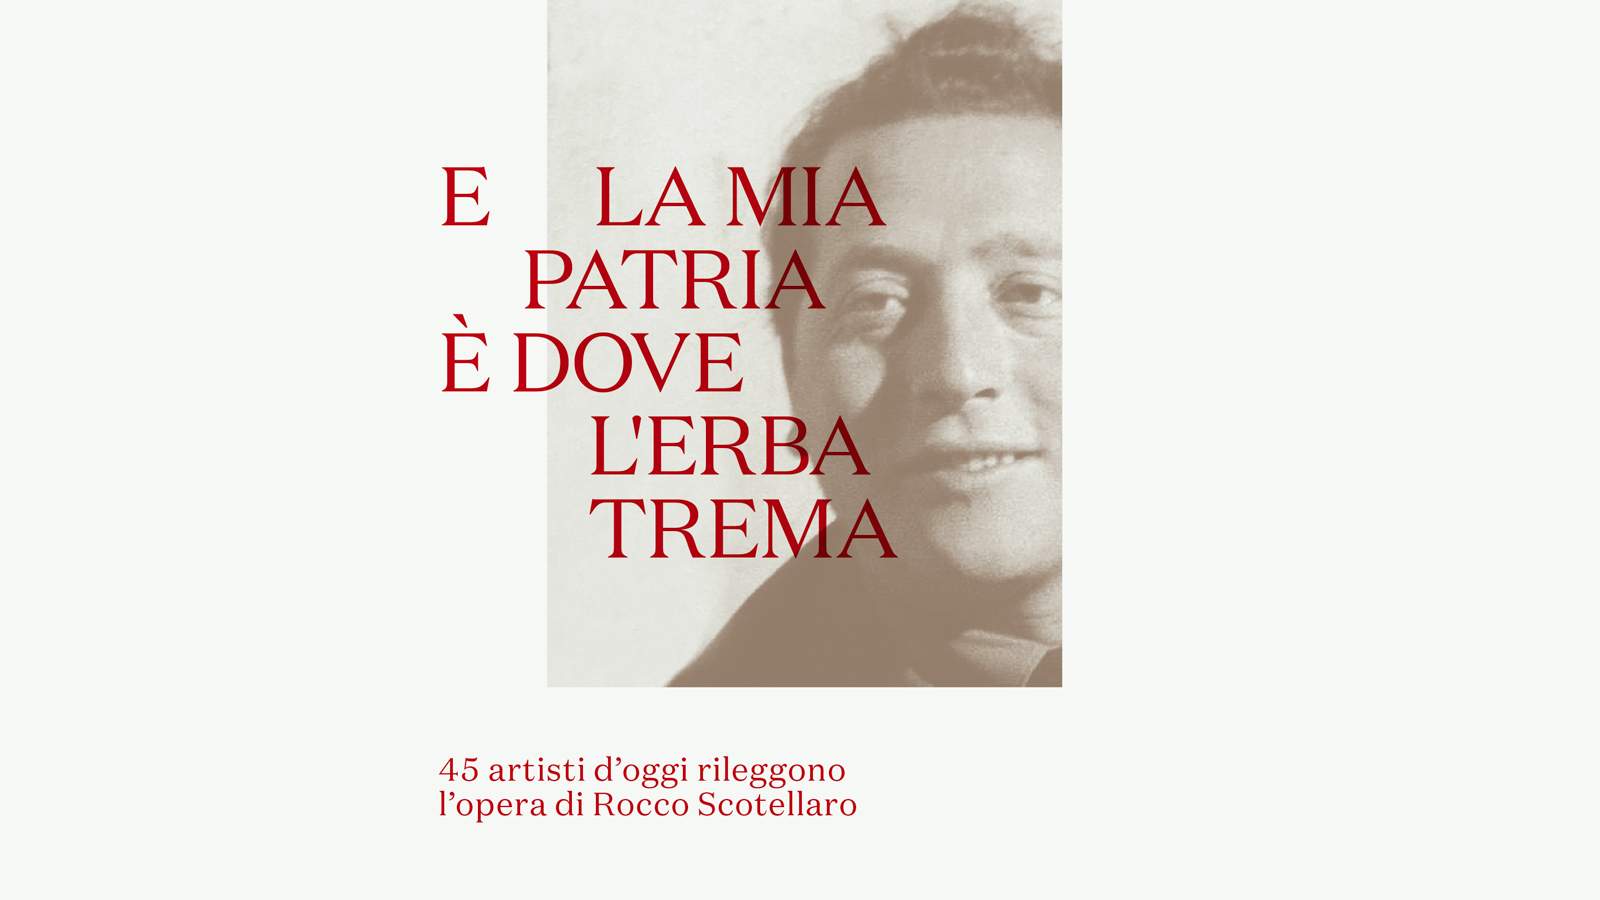 In Rome, 45 contemporary artists reread the poems of Rocco Scotellaro